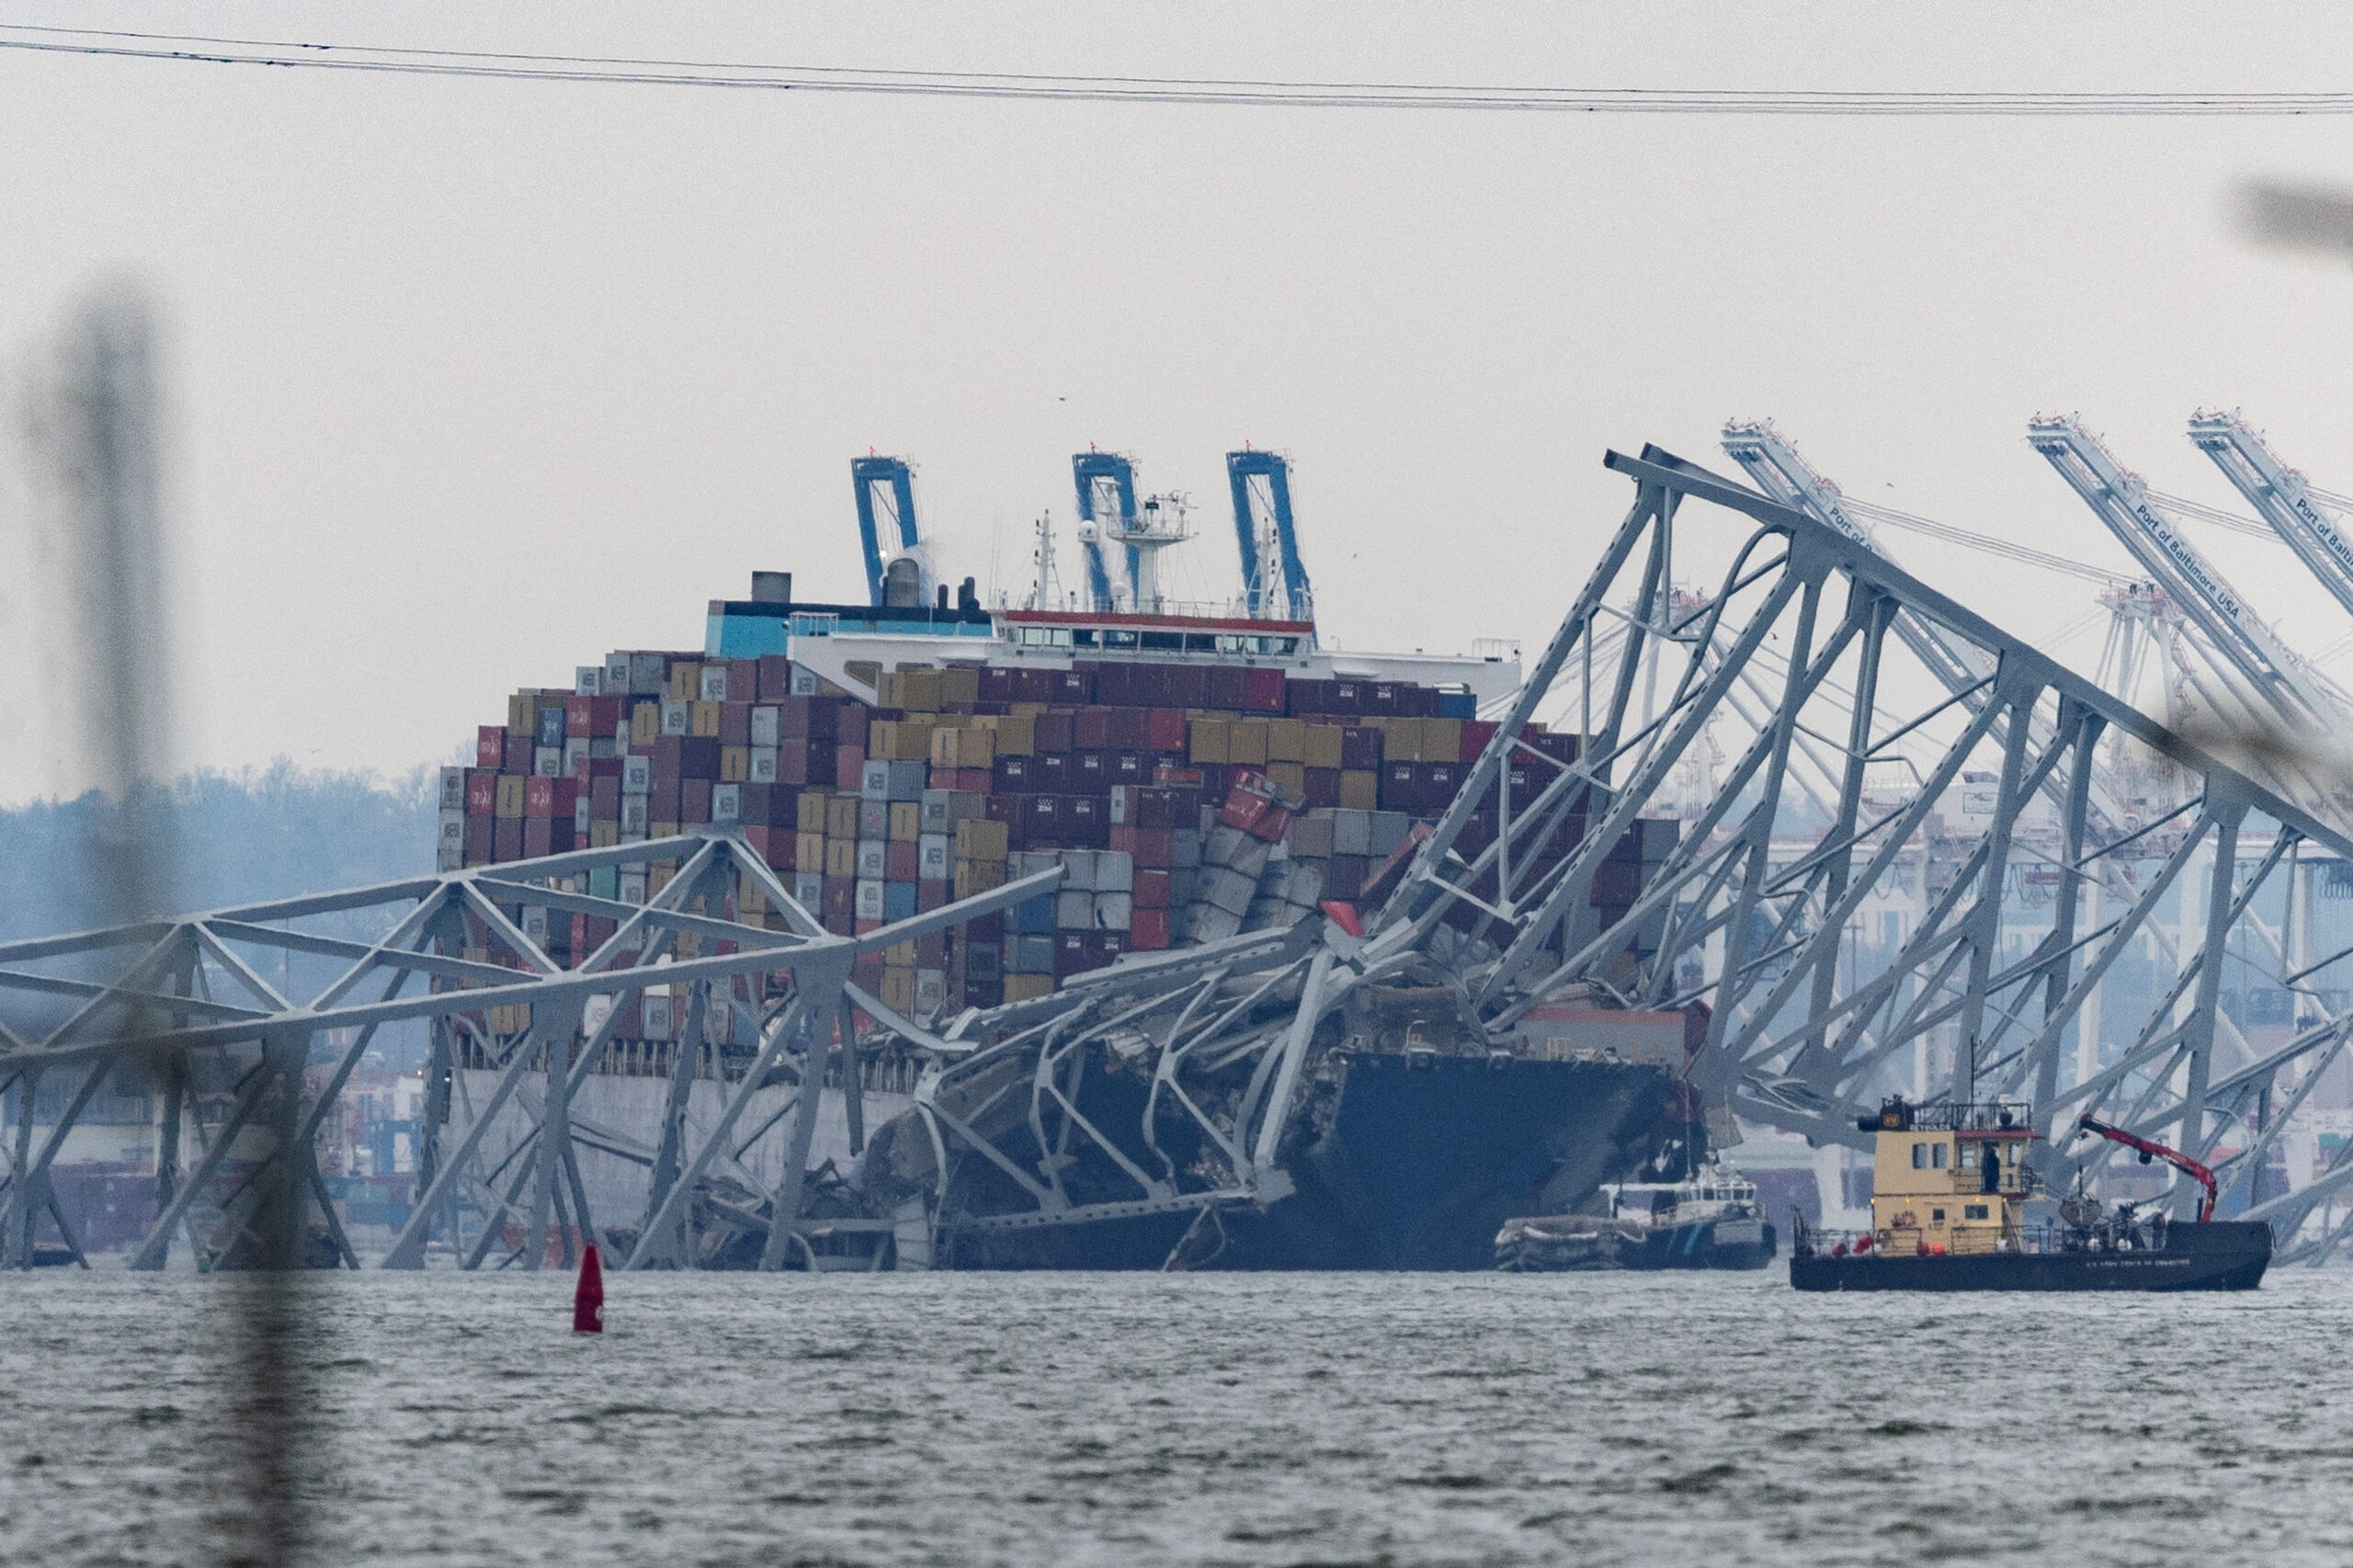 Maryland gets $60 million to rebuild collapsed Baltimore bridge